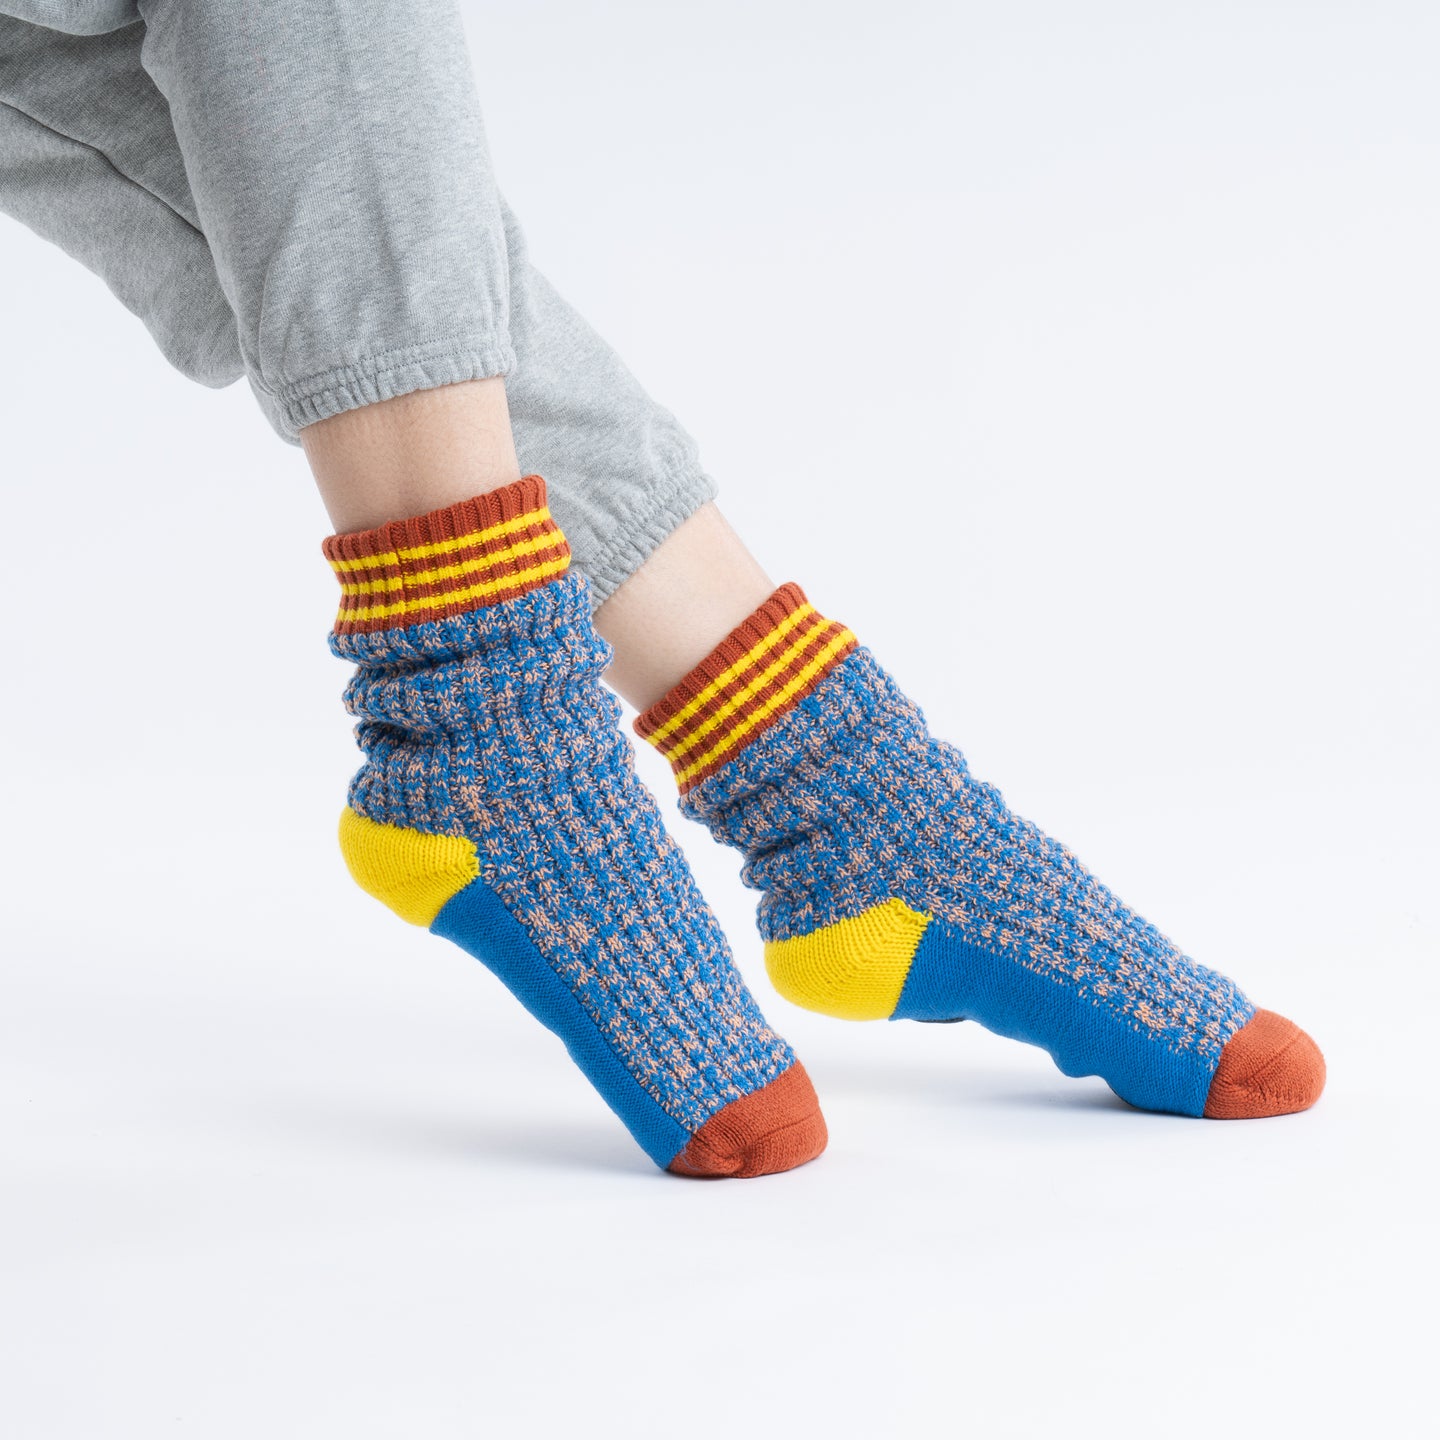 Varsity House Socks Fleece Lined Indoor Thick Knitted Socks Warm Cold Feet Blue Retro